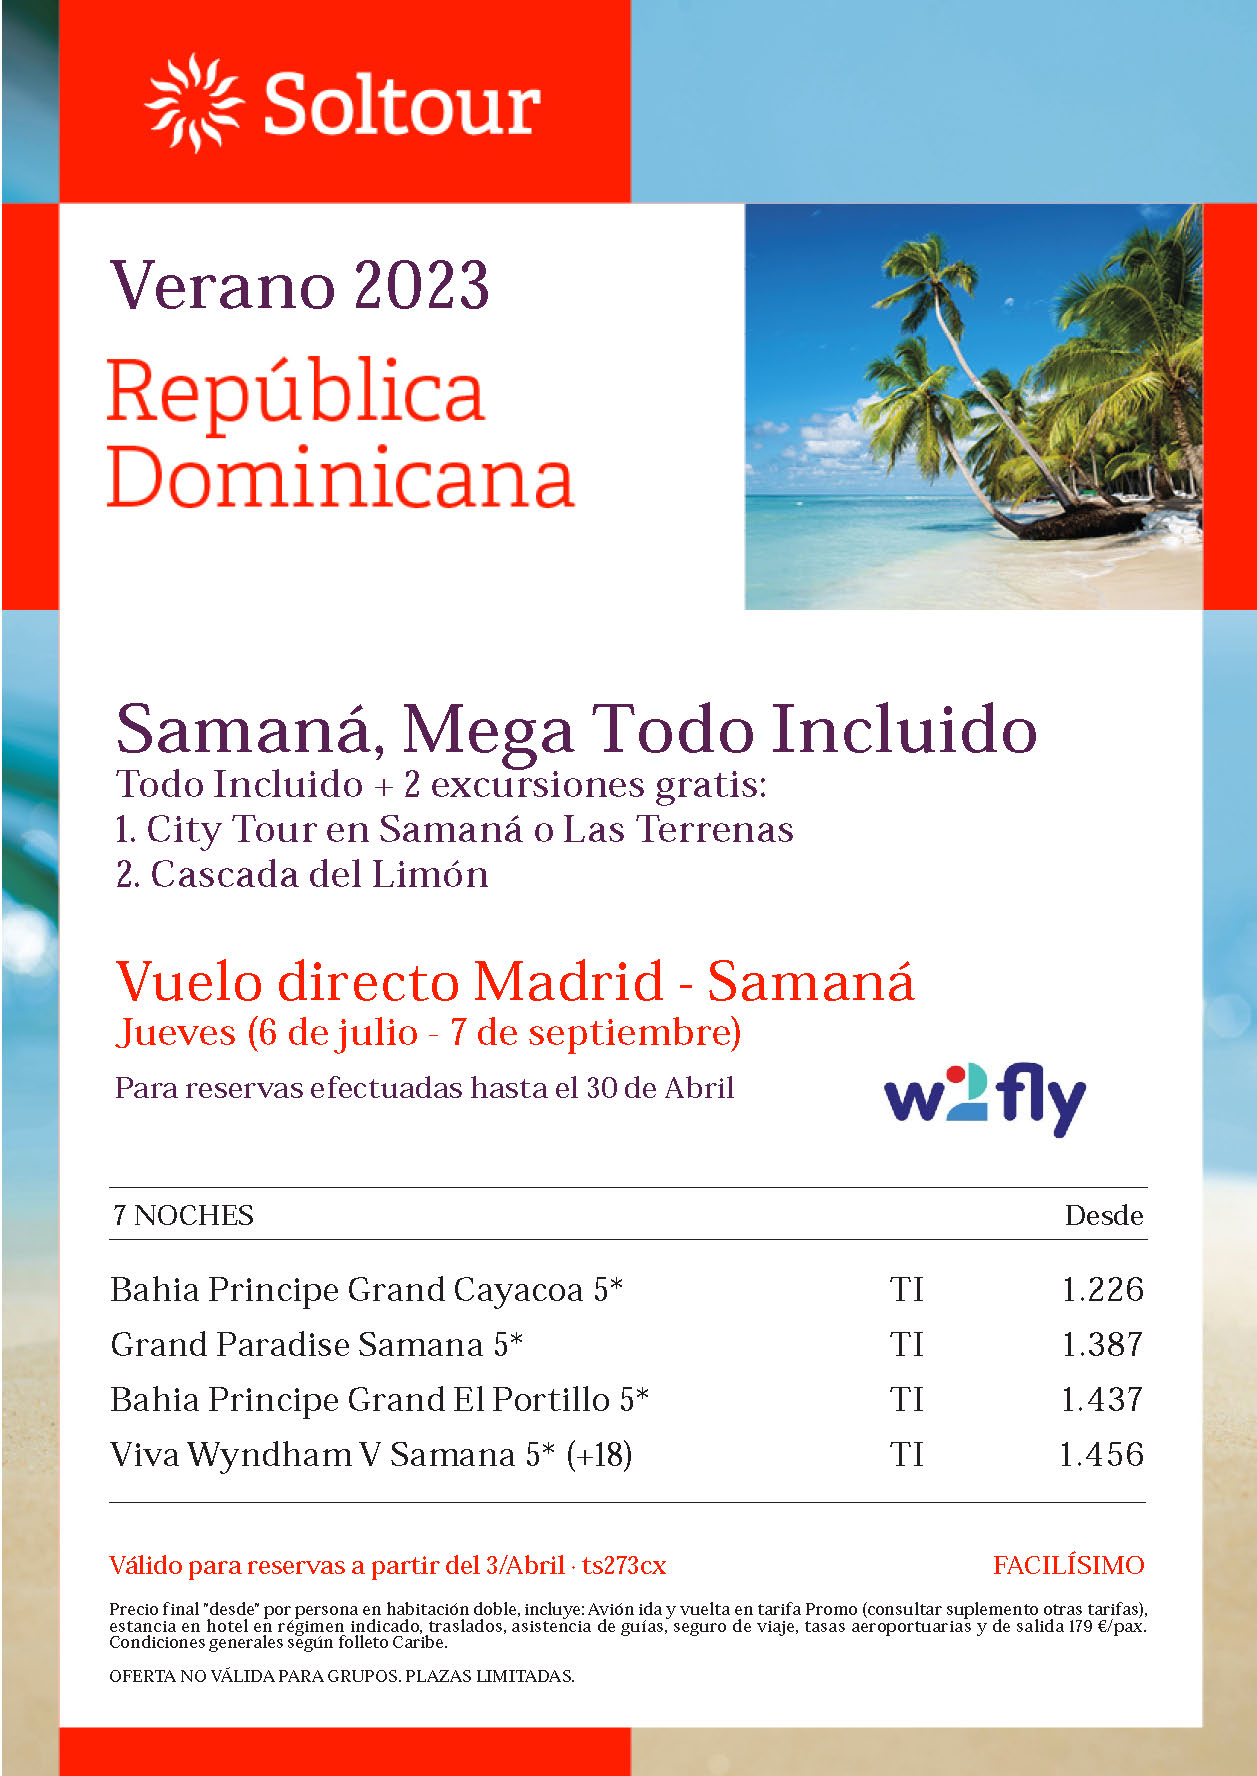 Oferta Soltour Republica Dominicana Julio Agosto Septiembre 2023 Samana Mega Todo Incluido salidas en vuelo directo desde Madrid